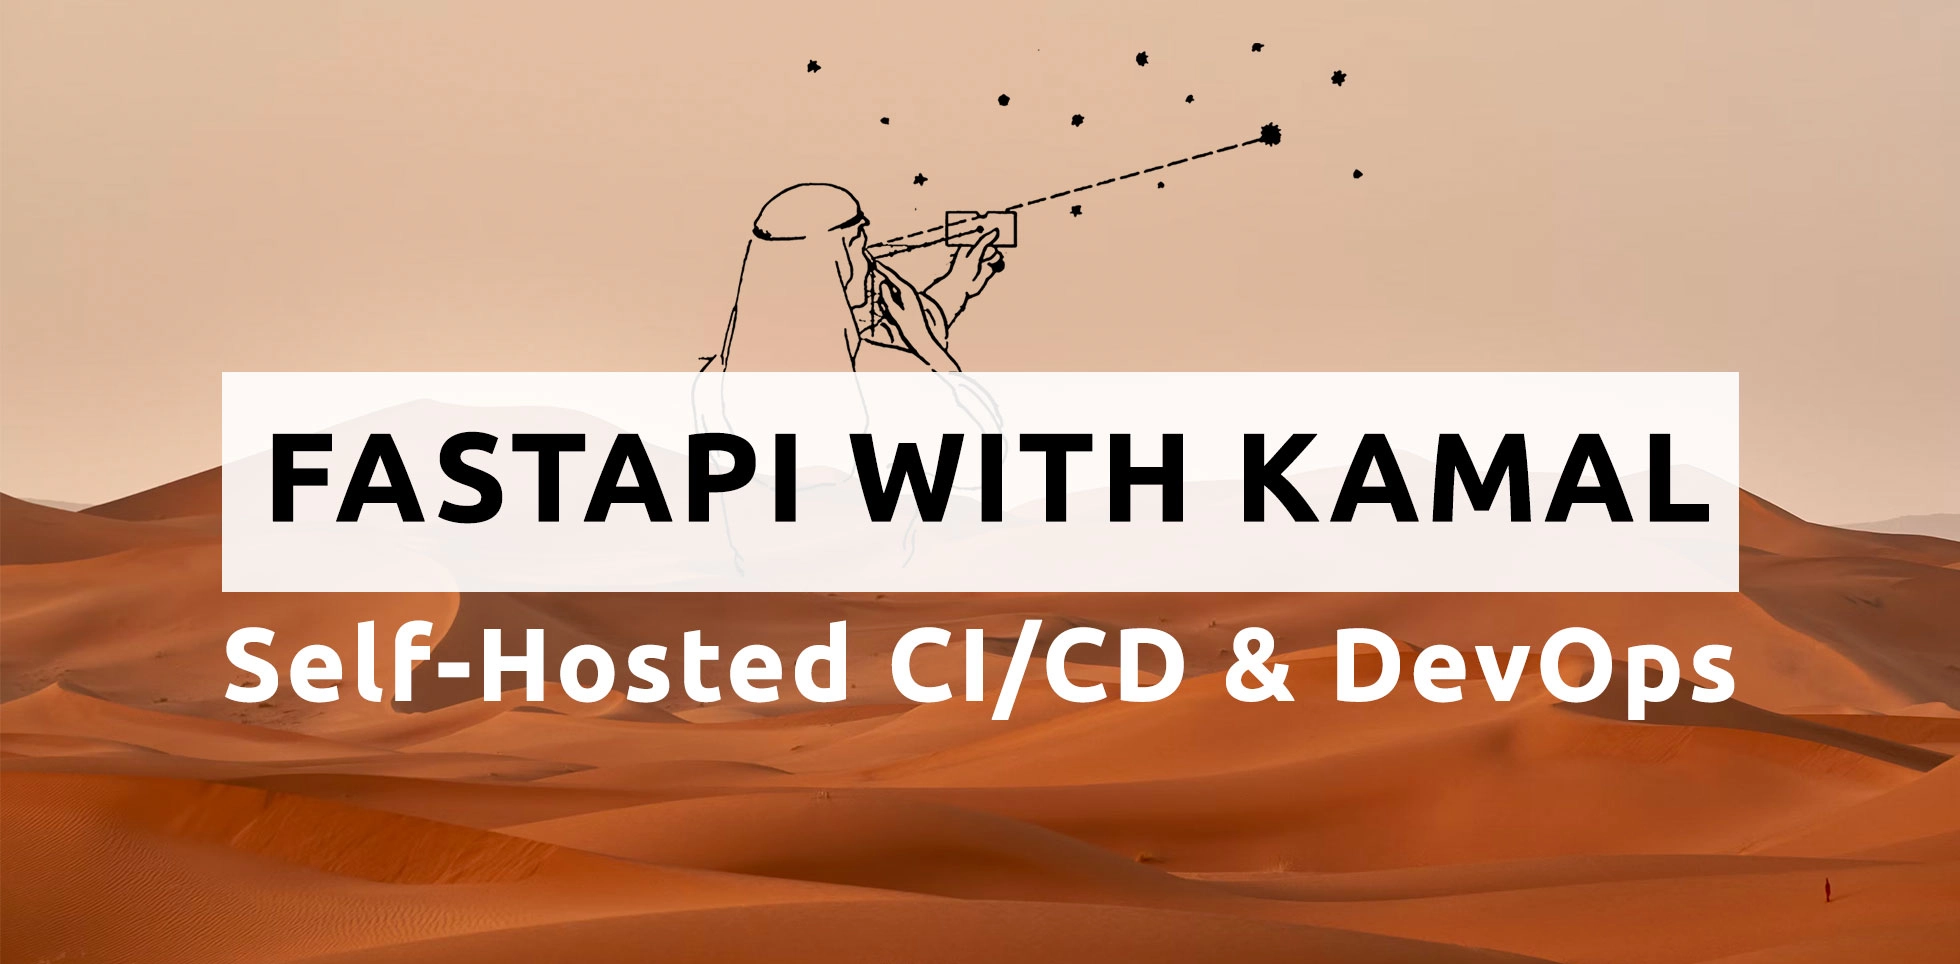 Deploying FastAPI Python App With Kamal: Self-Hosted CI/CD & DevOps for €5/mo